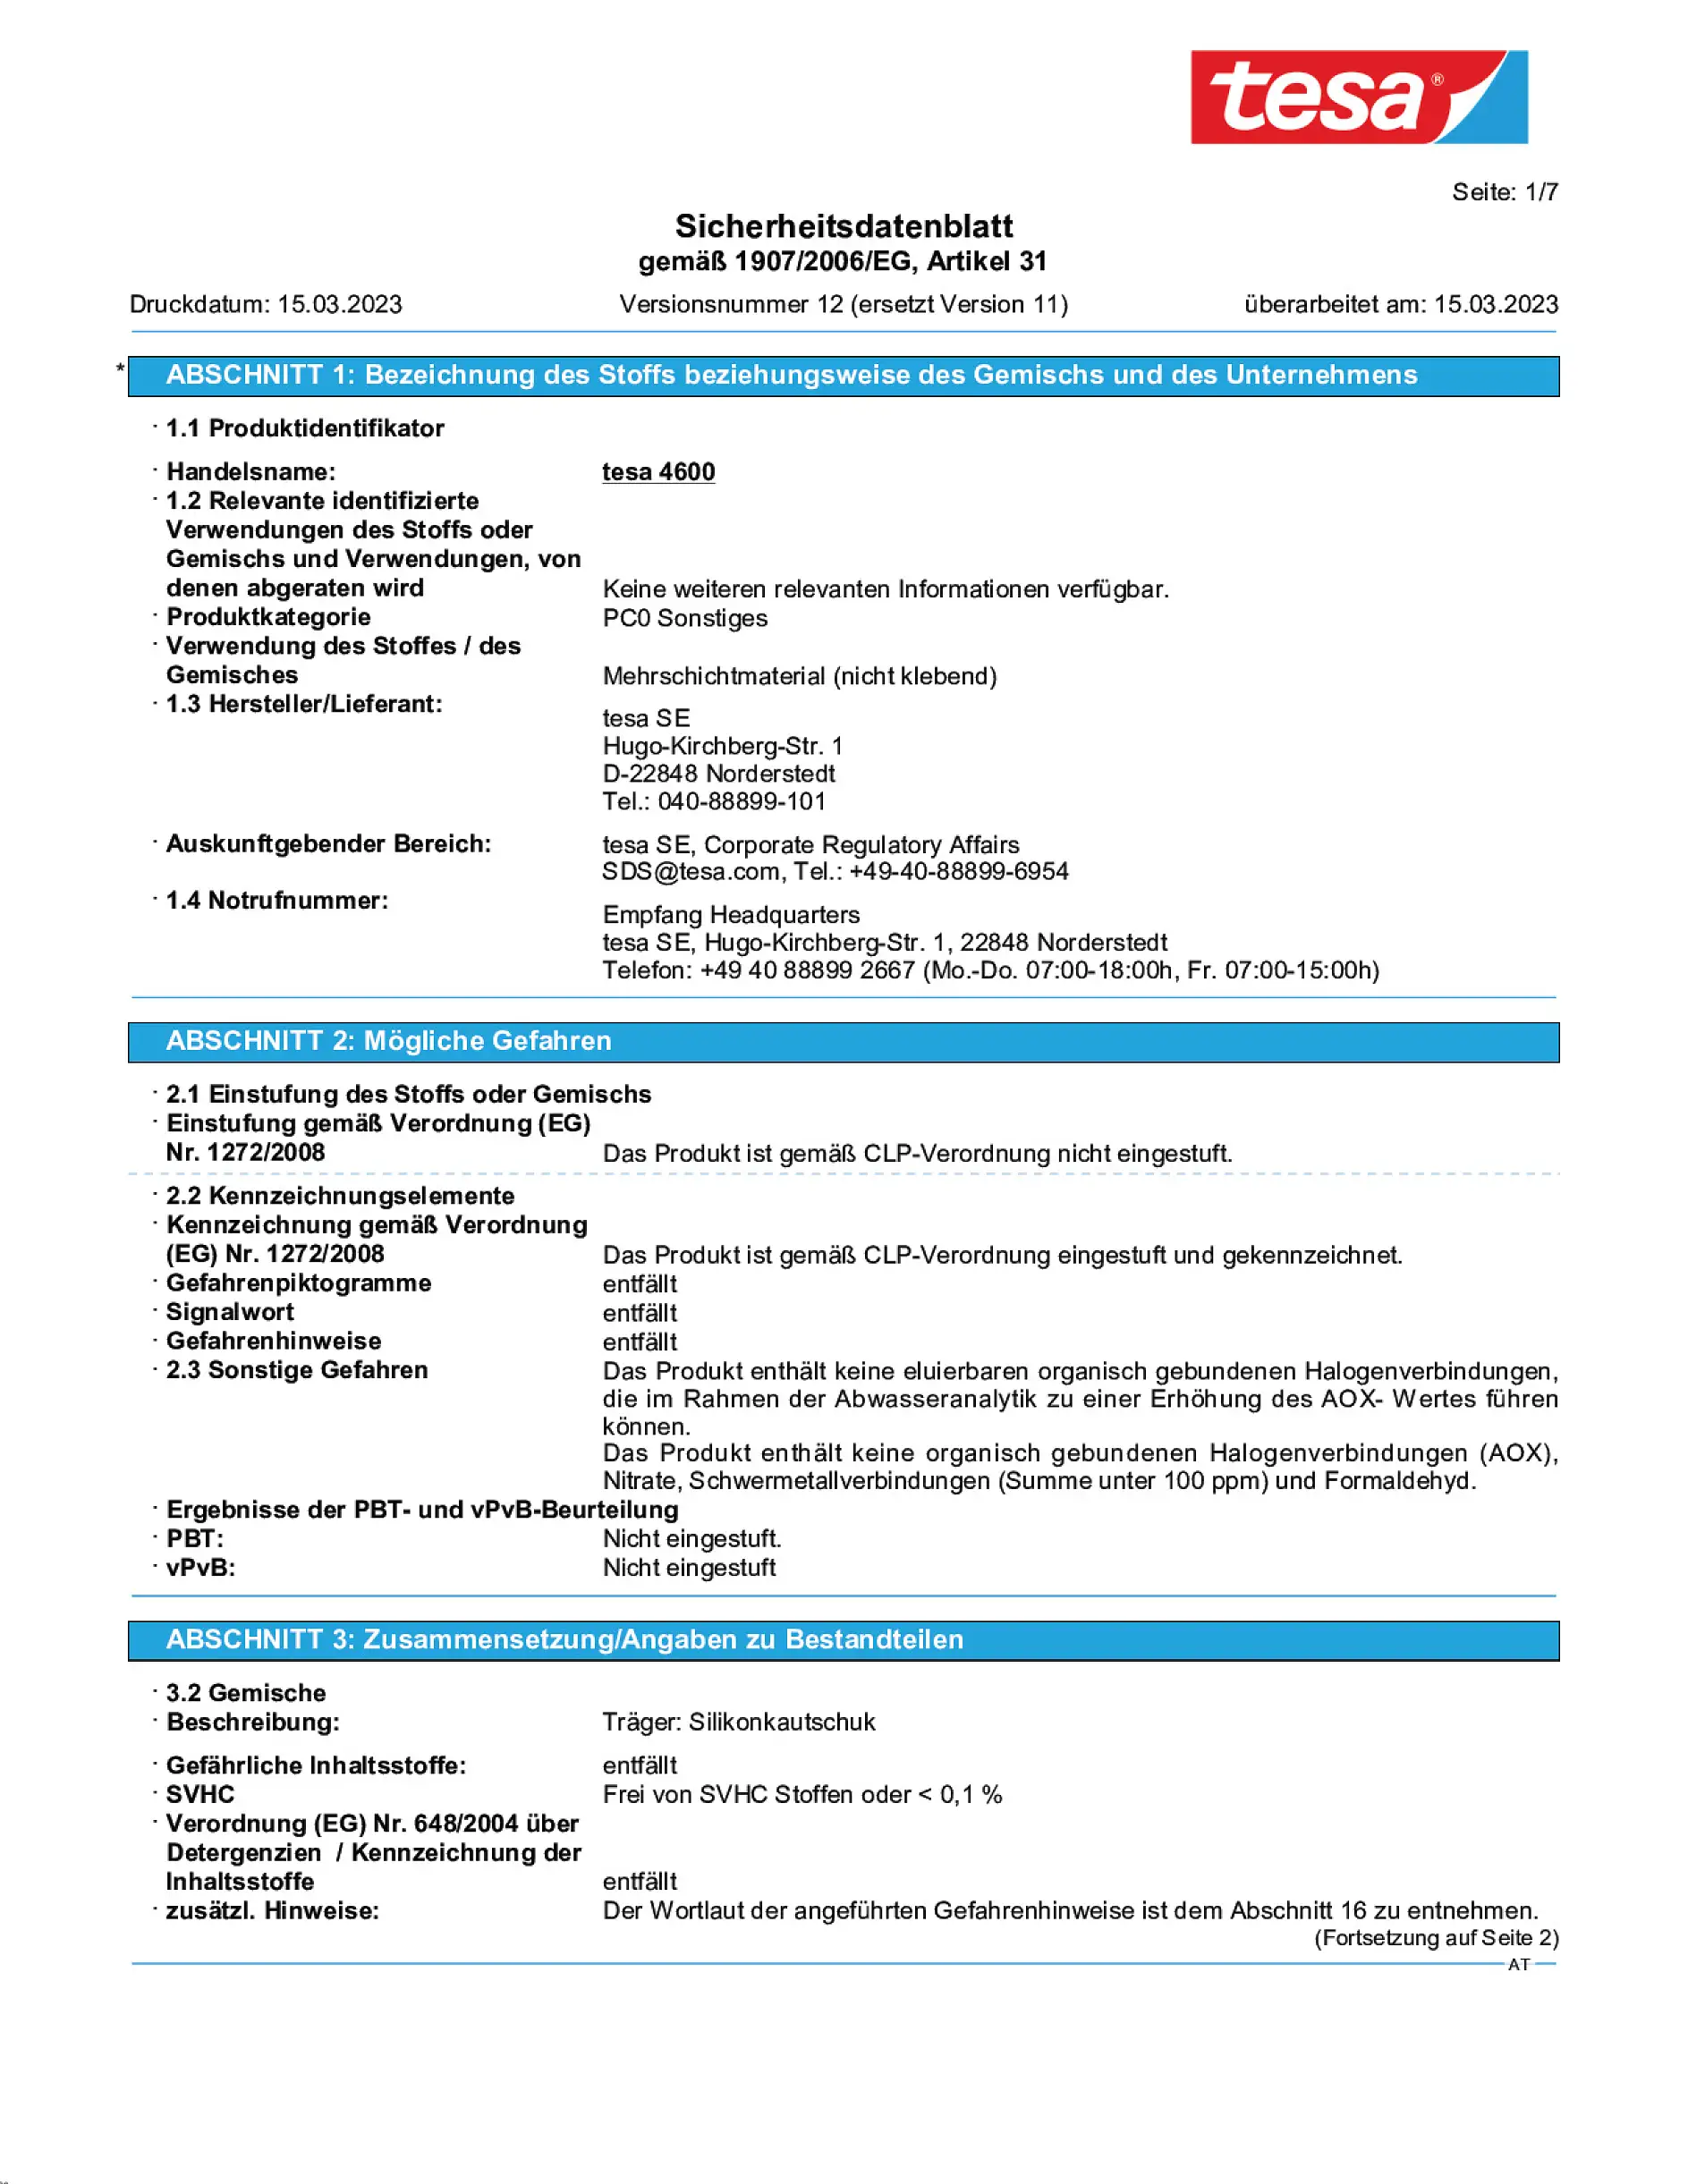 Safety data sheet_tesa® Professional 04600_de-AT_v12